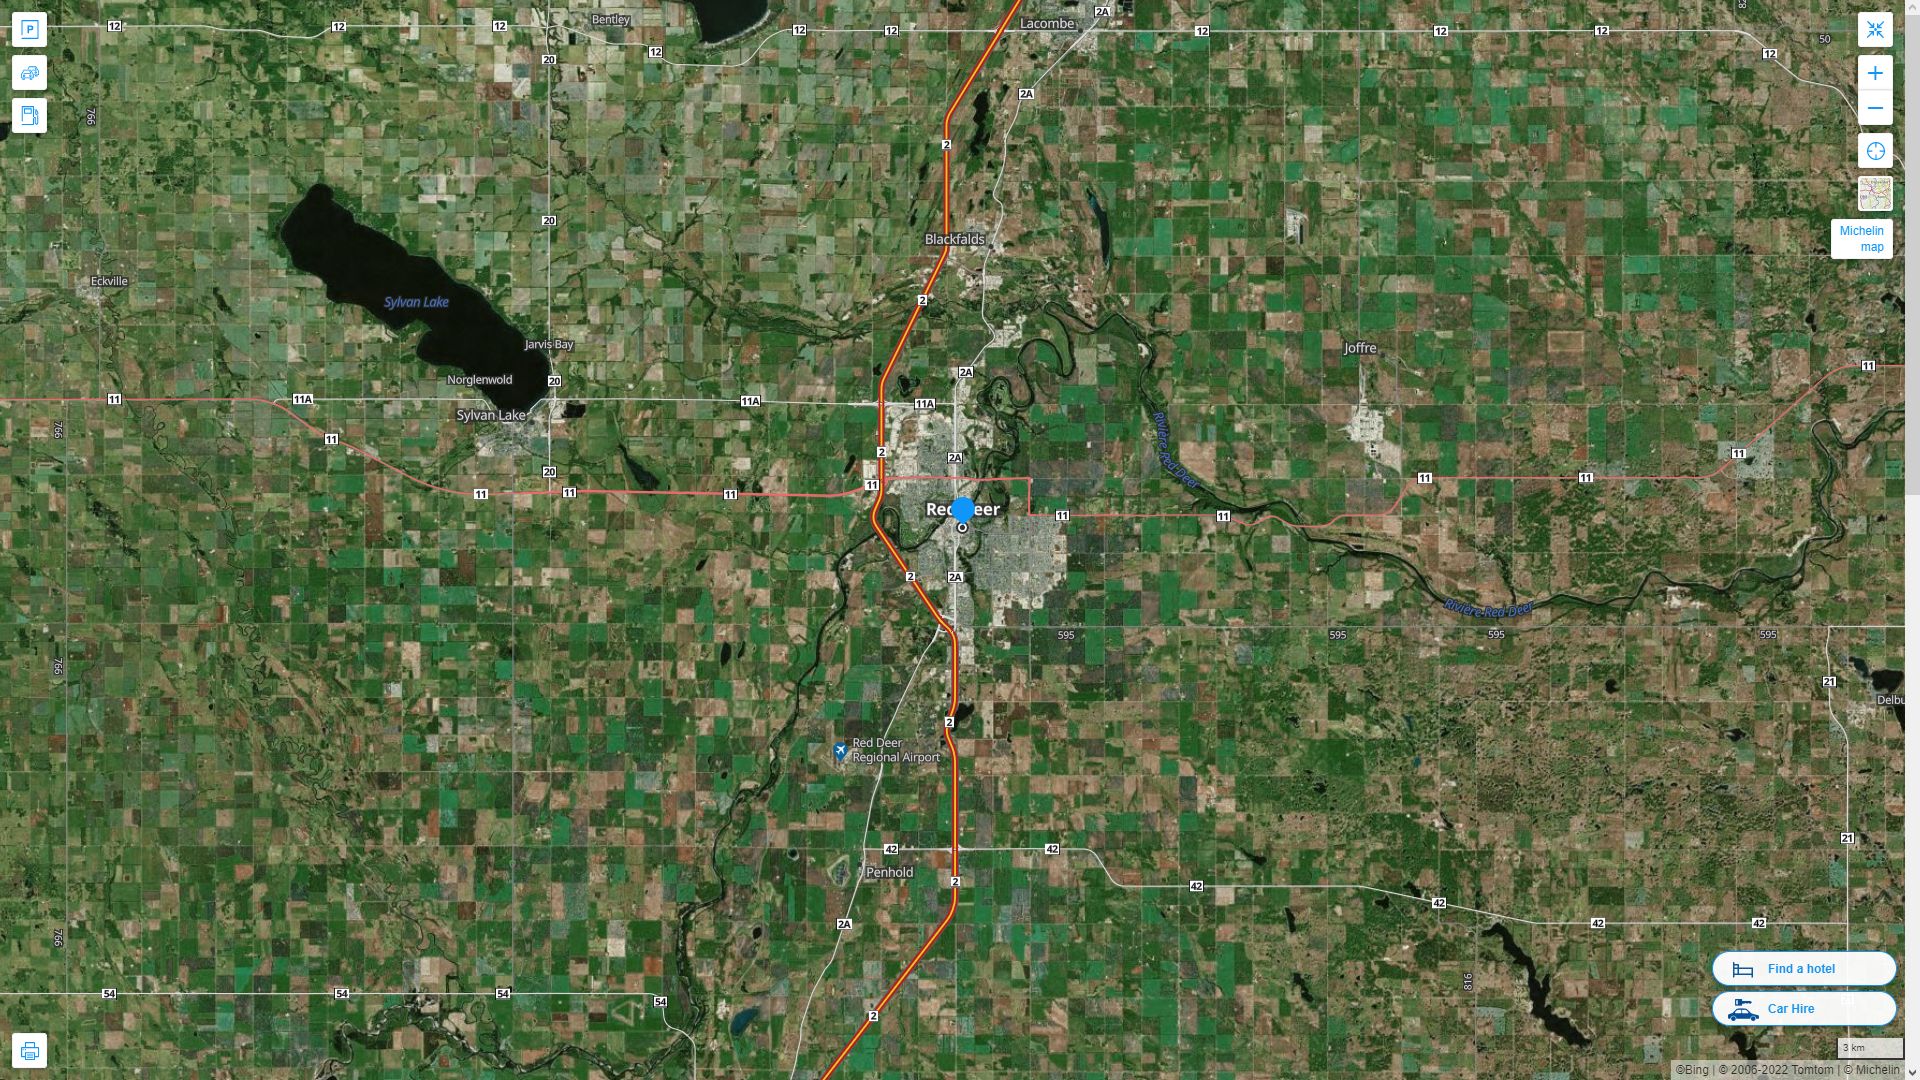 Red Deer Canada Autoroute et carte routiere avec vue satellite